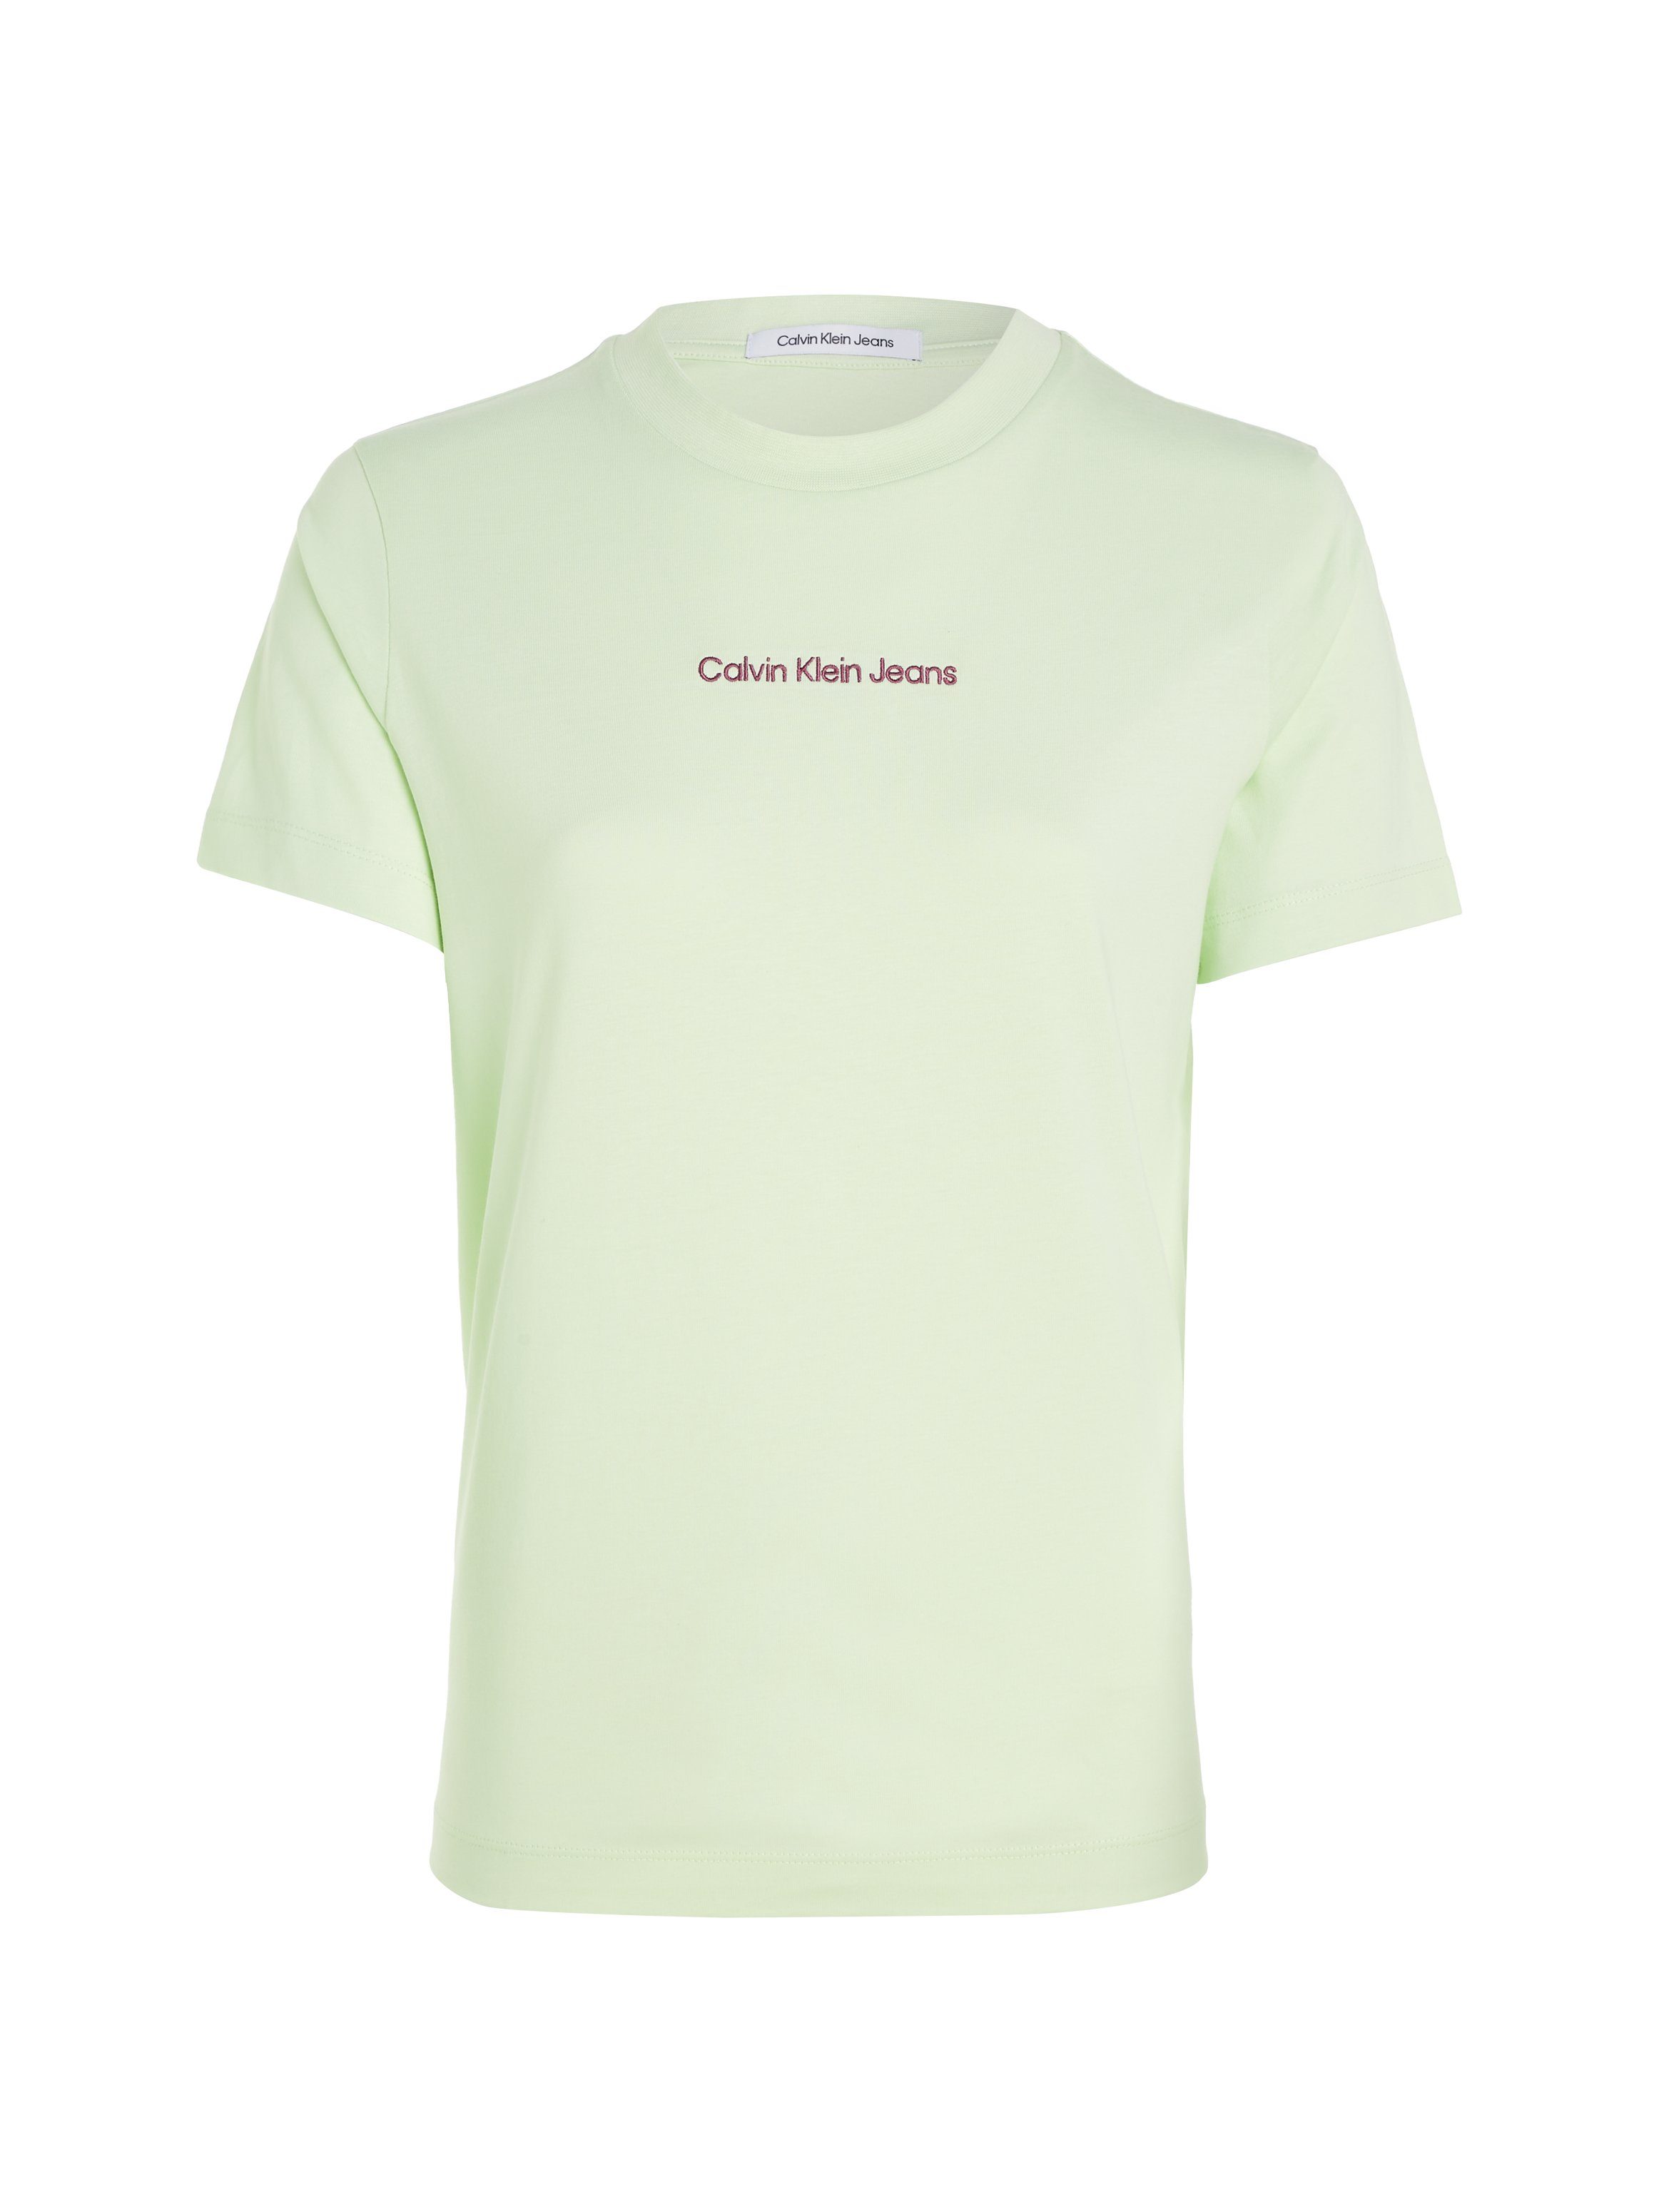 INSTITUTIONAL Klein STRAIGHT Green Canary Markenlabel T-Shirt TEE Amaranth Calvin / Jeans mit